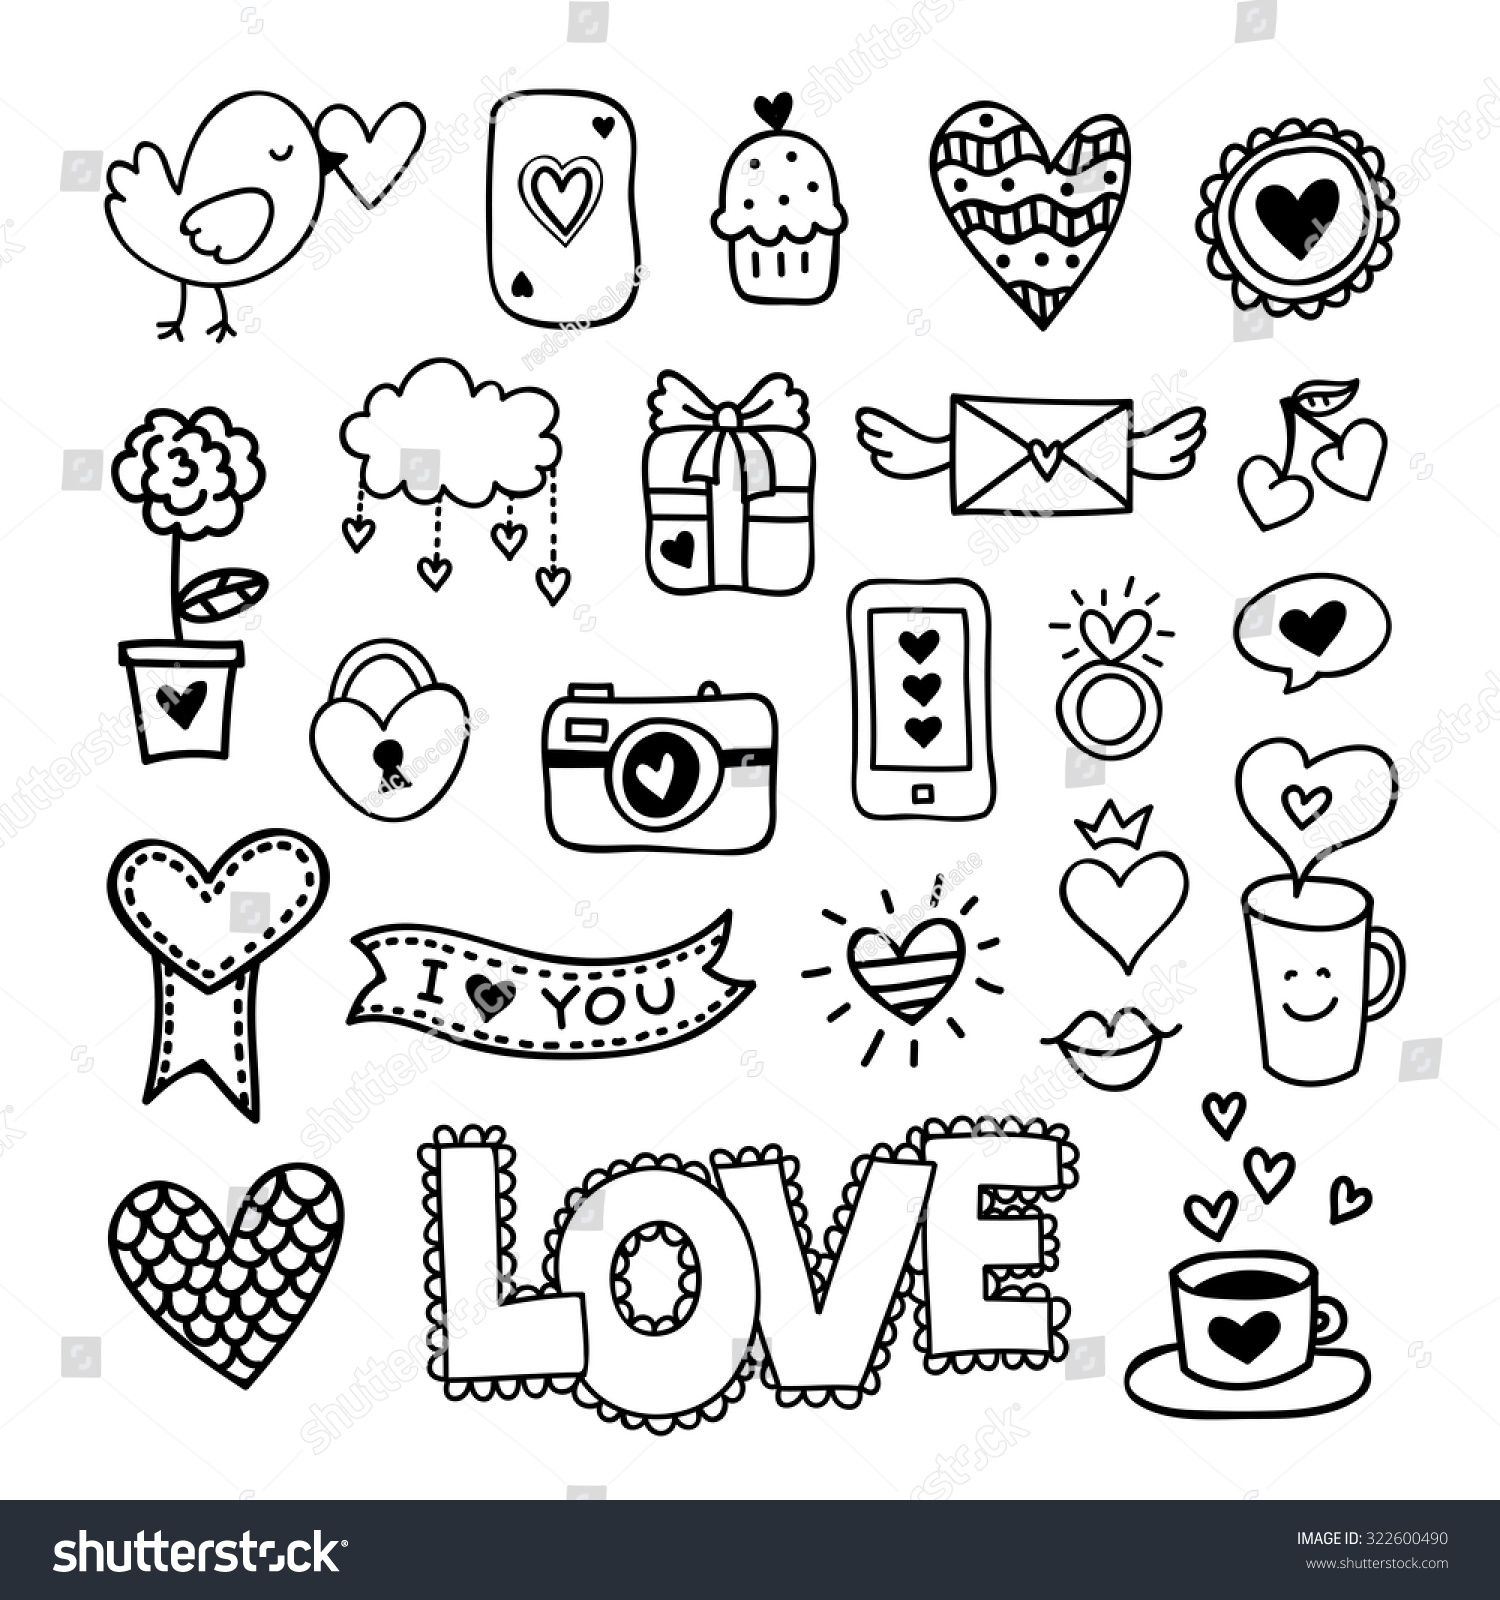 Fuck love icons